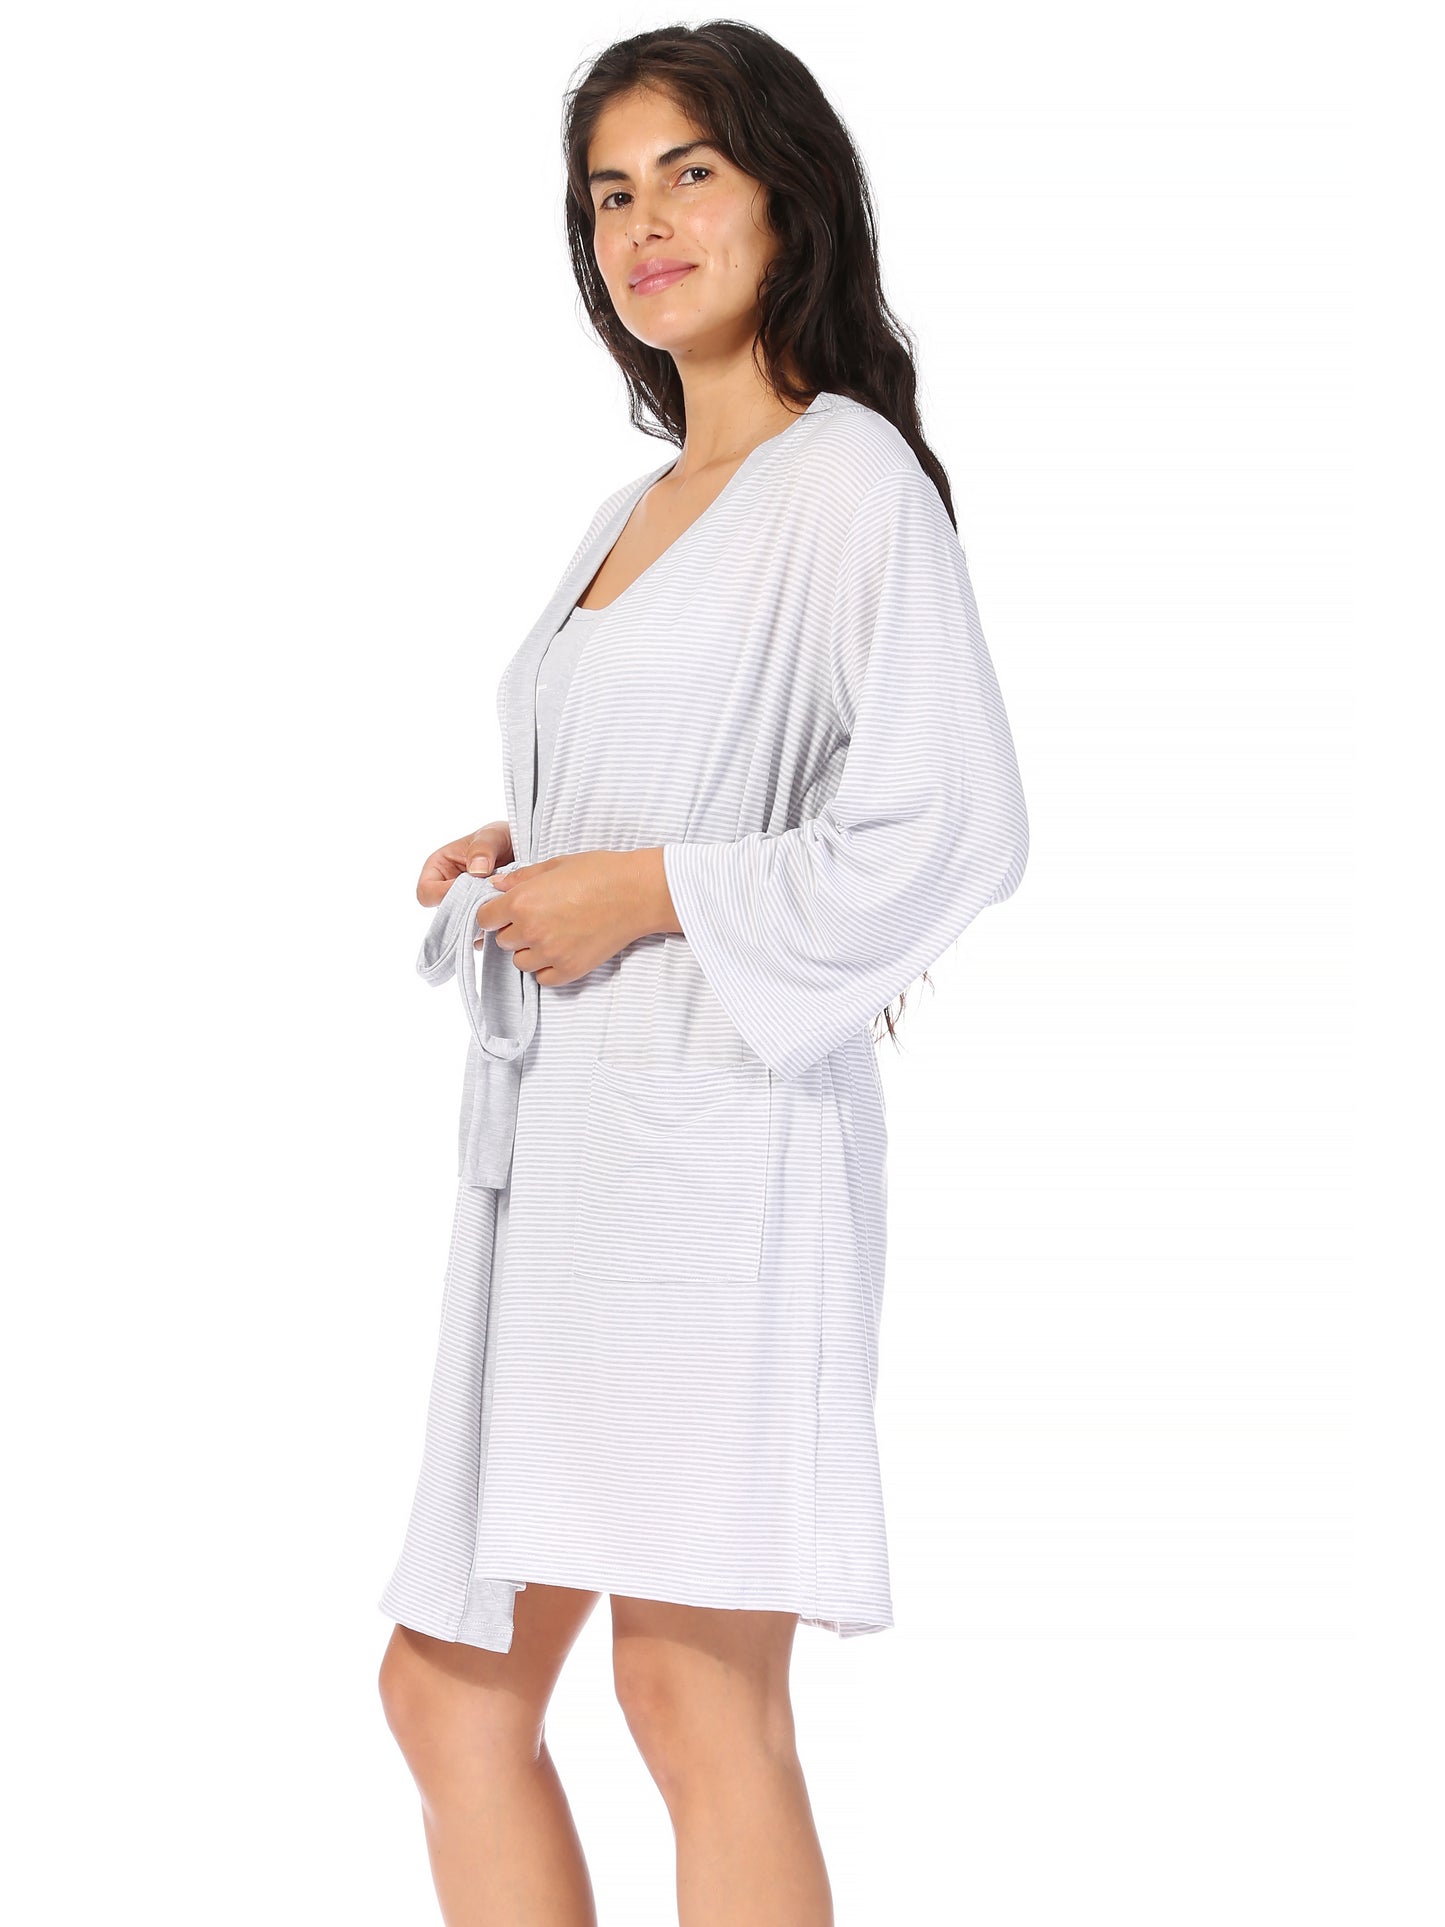 Women's "DREAM" 3-Piece Cami Shorts and Robe Travel Pajama Set - Rae Dunn Wear - W Travel Set